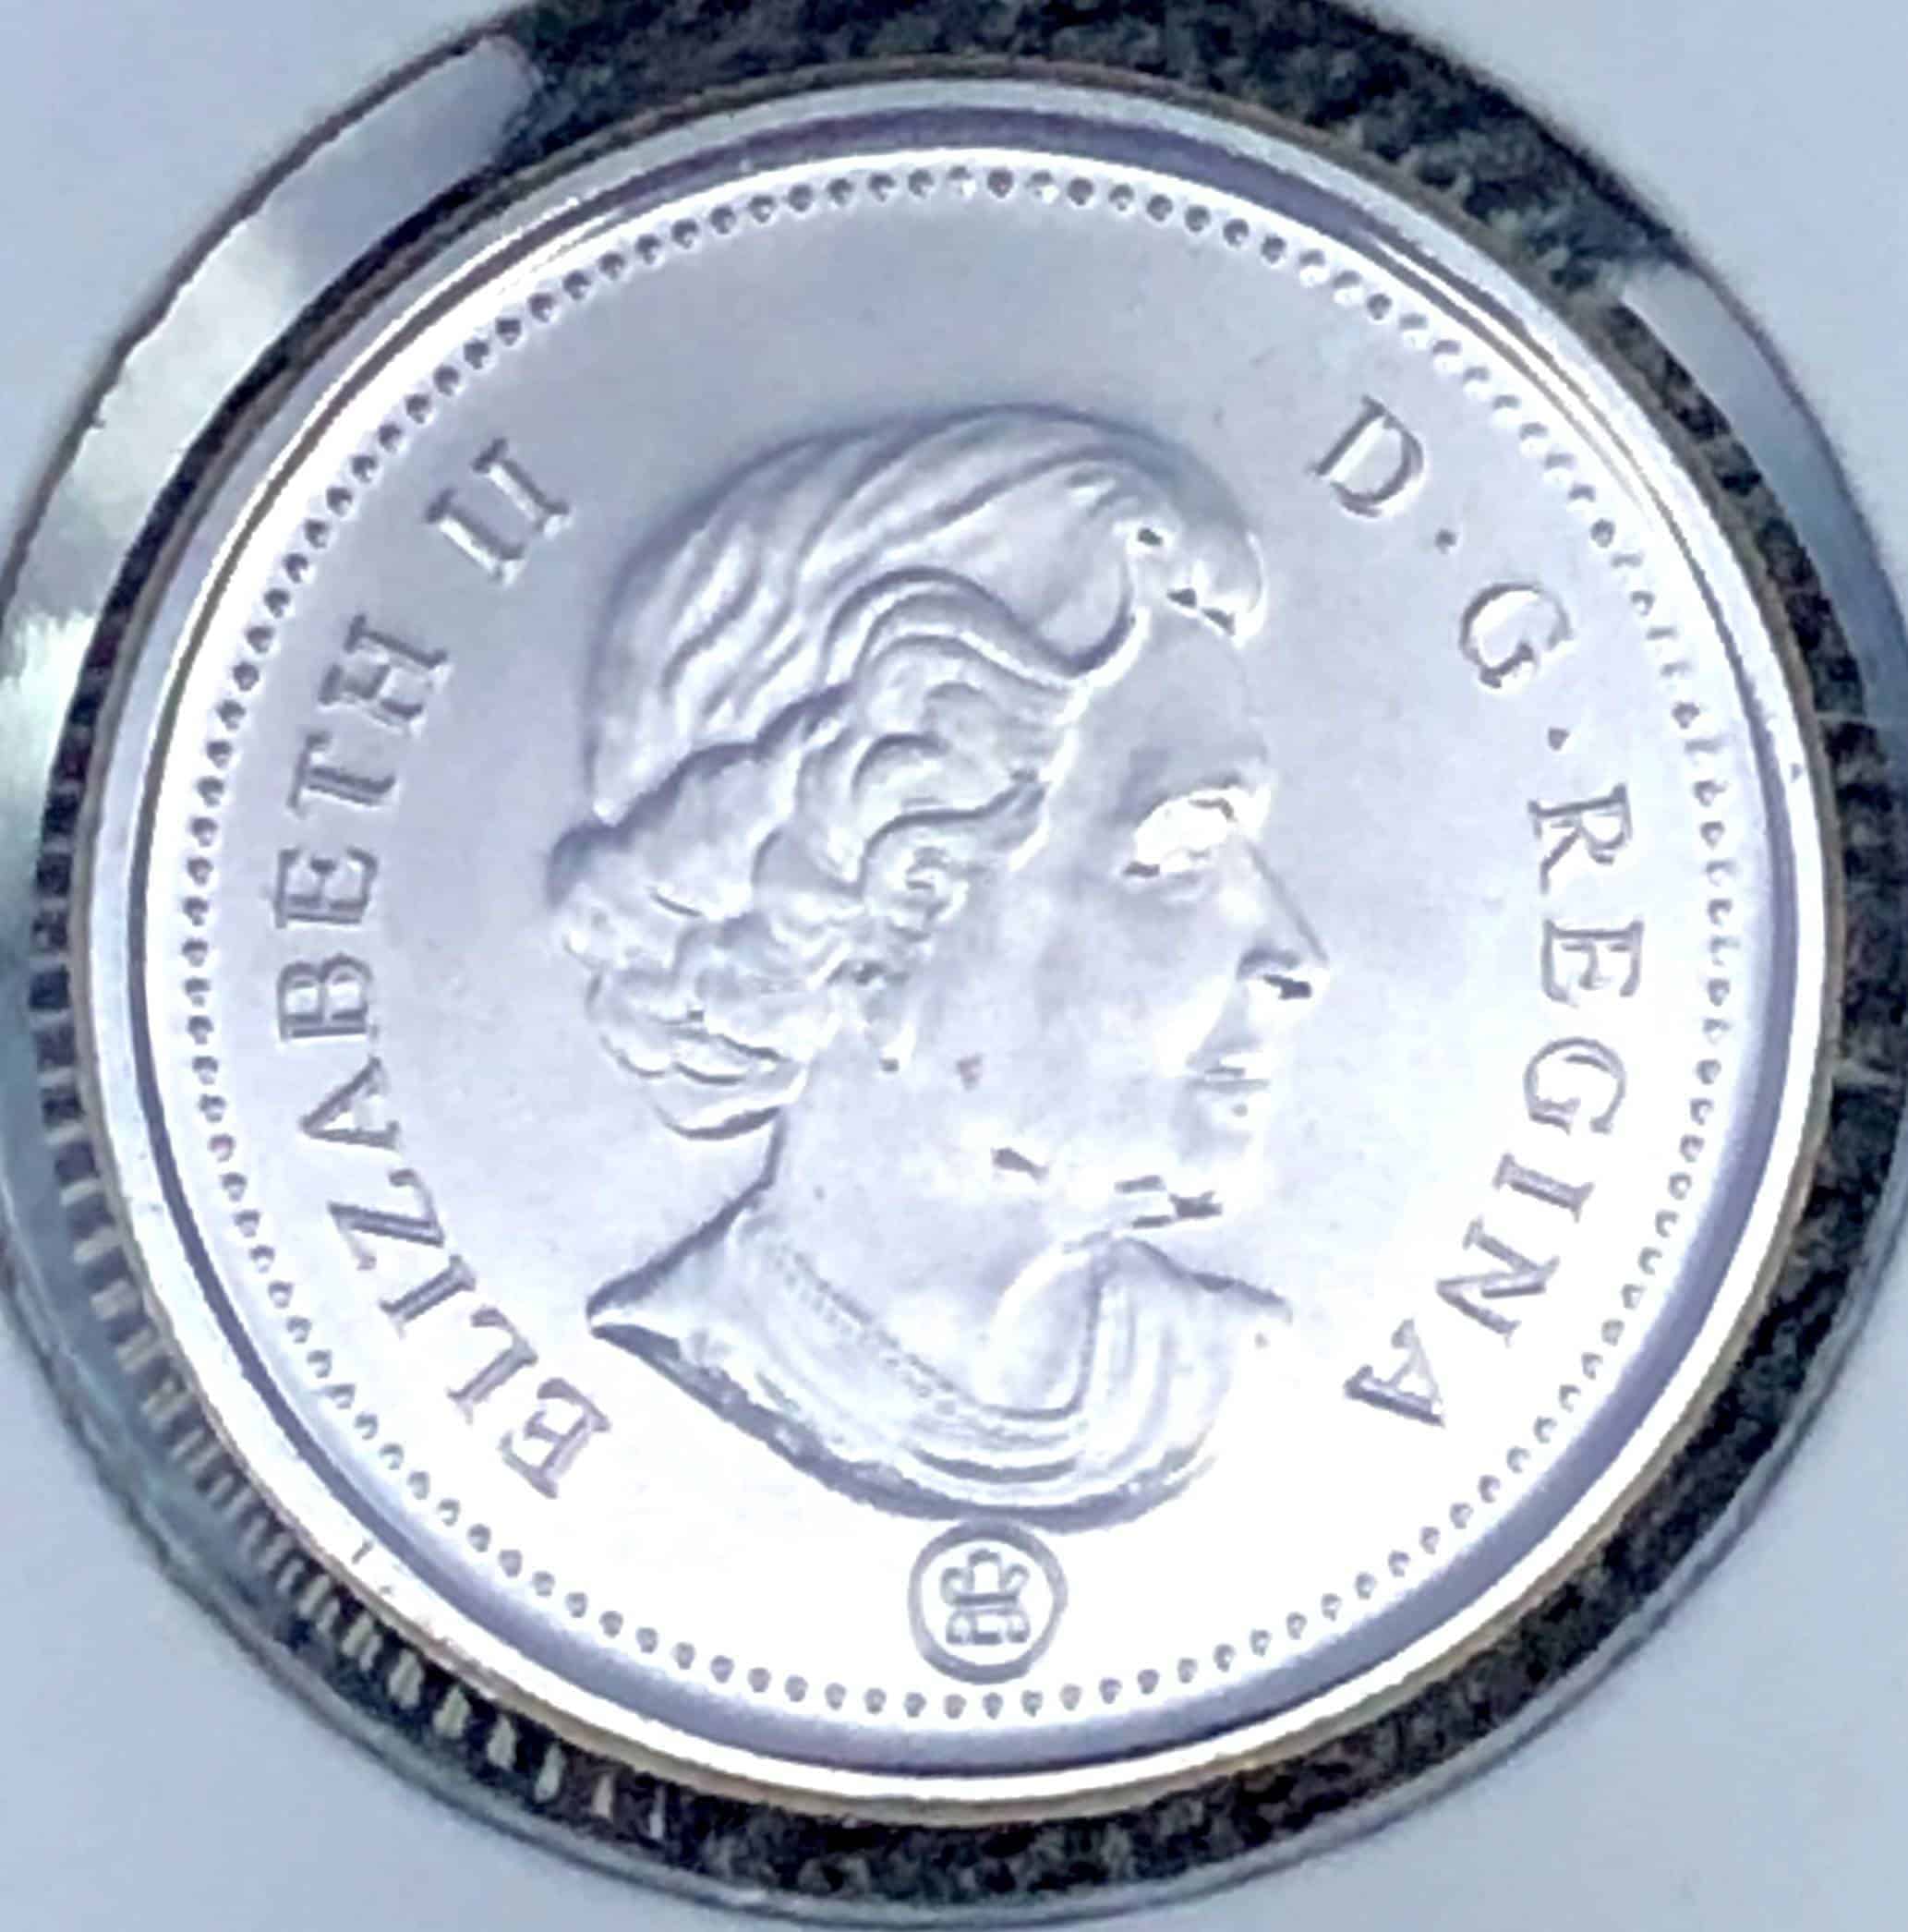 Canada - 10 cents 2011 - B.UNC